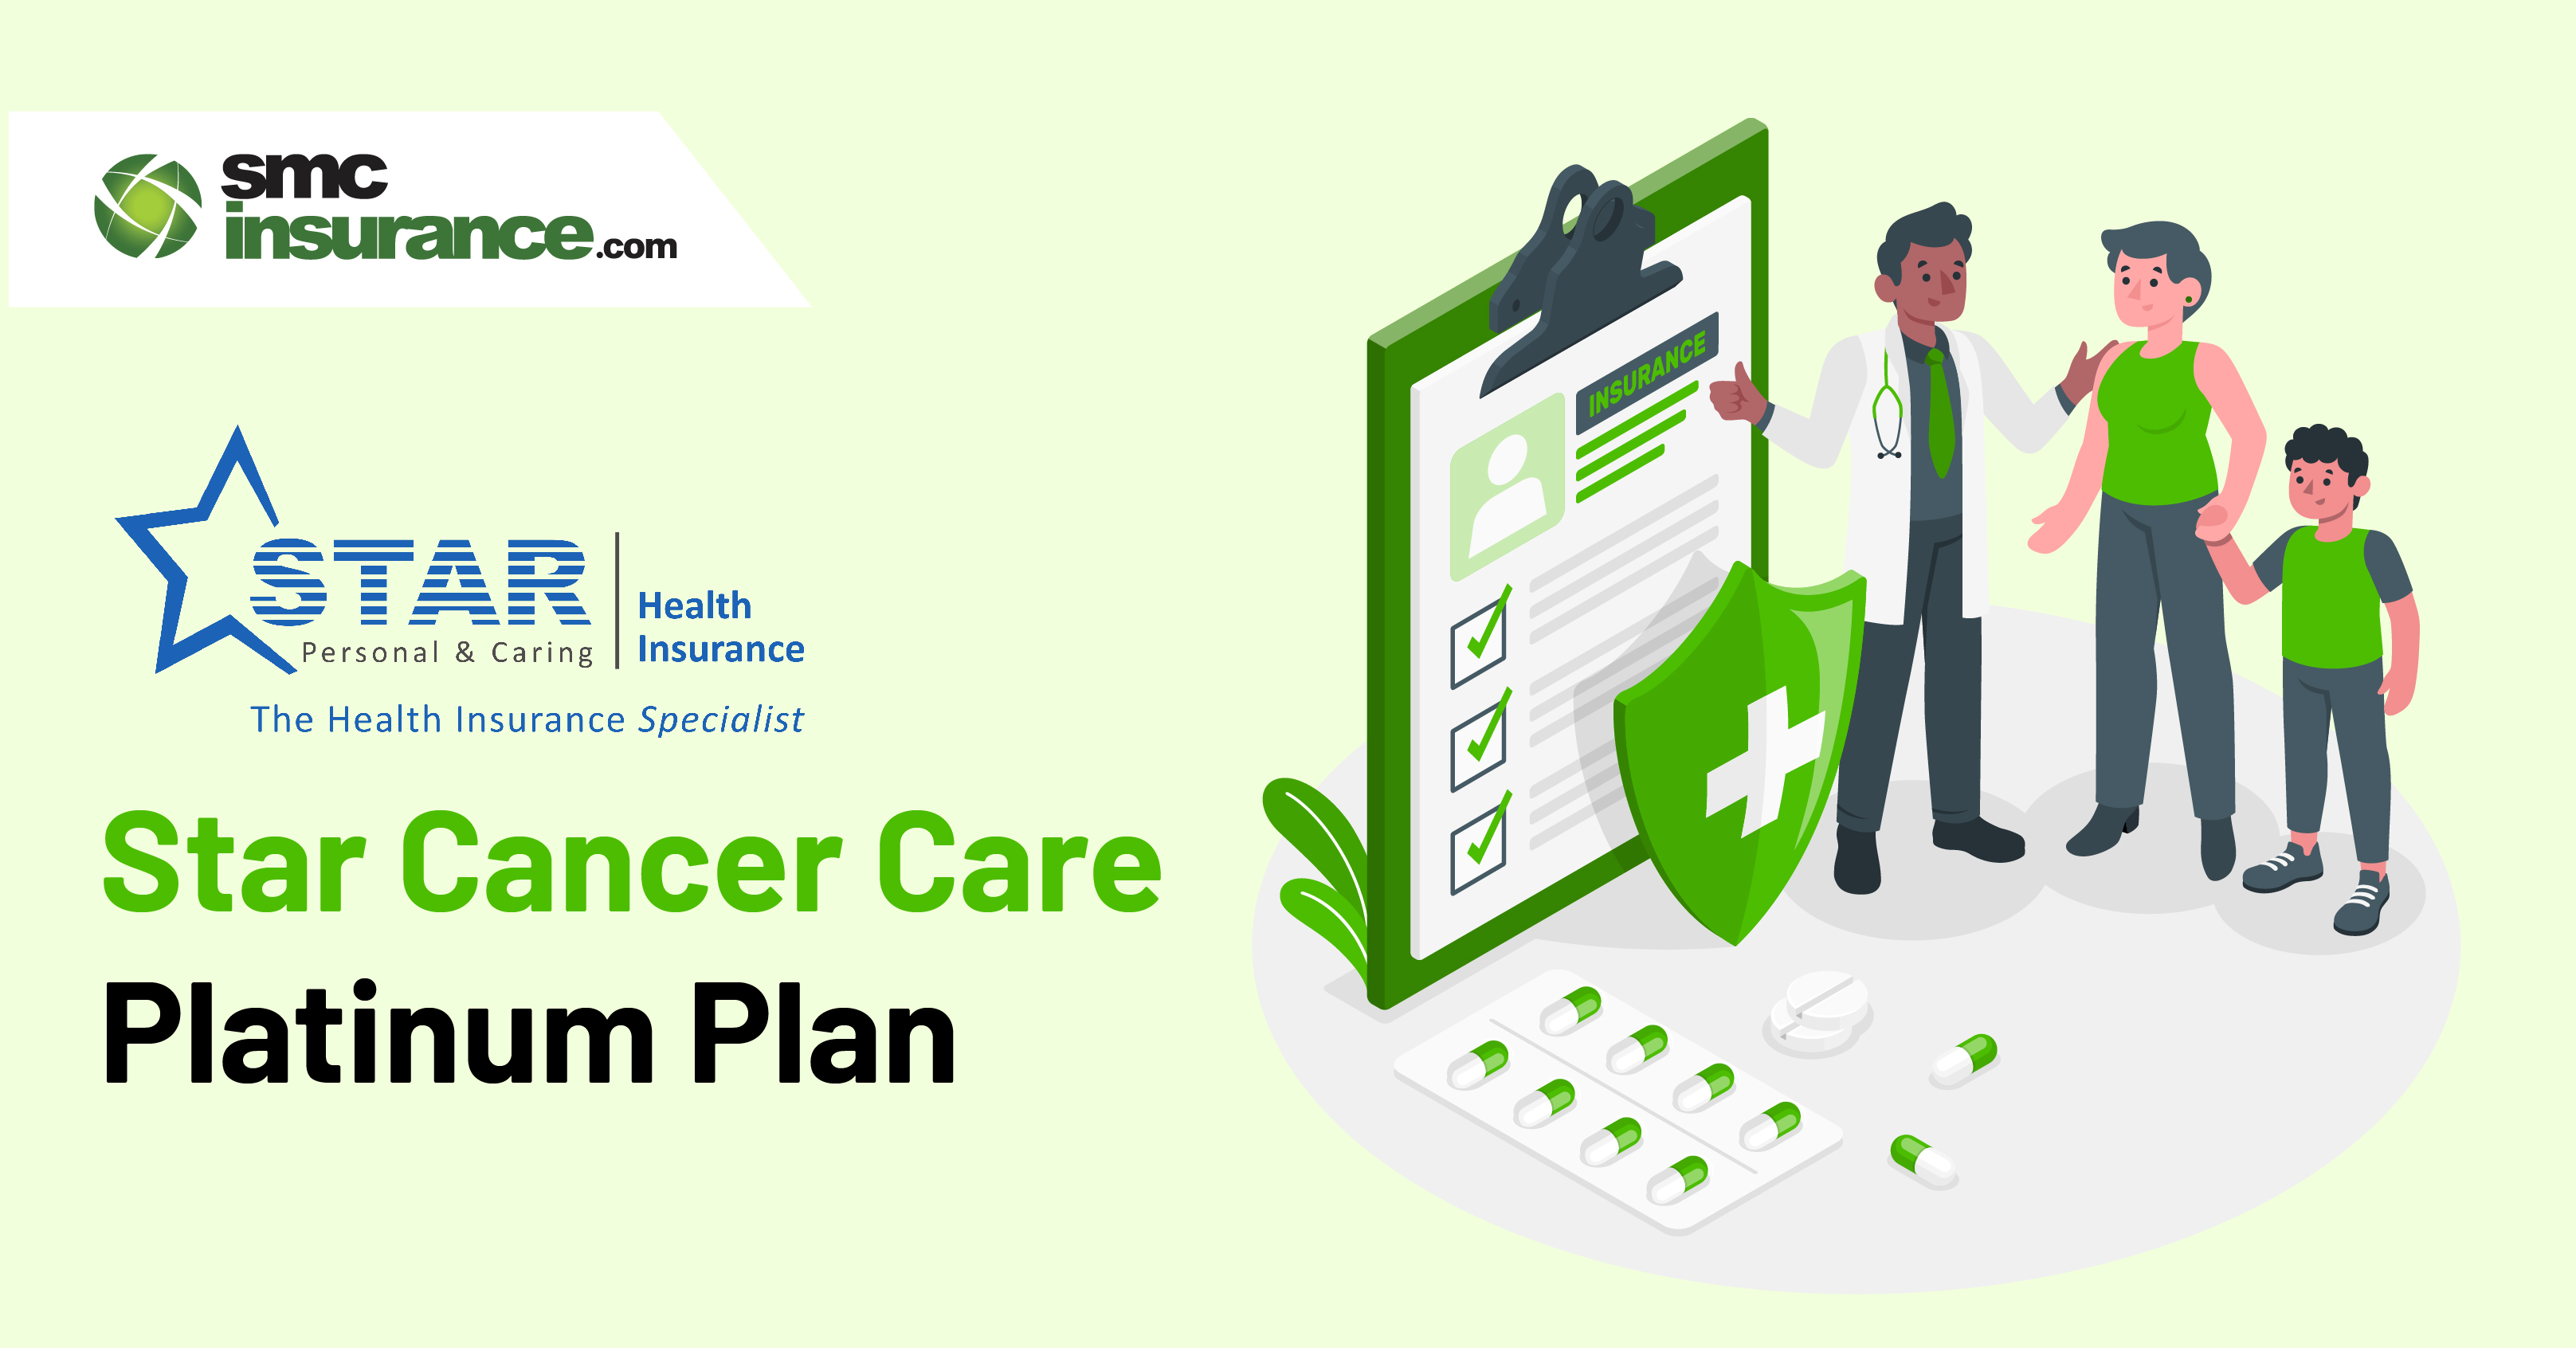 Star Cancer Care Platinum Plan